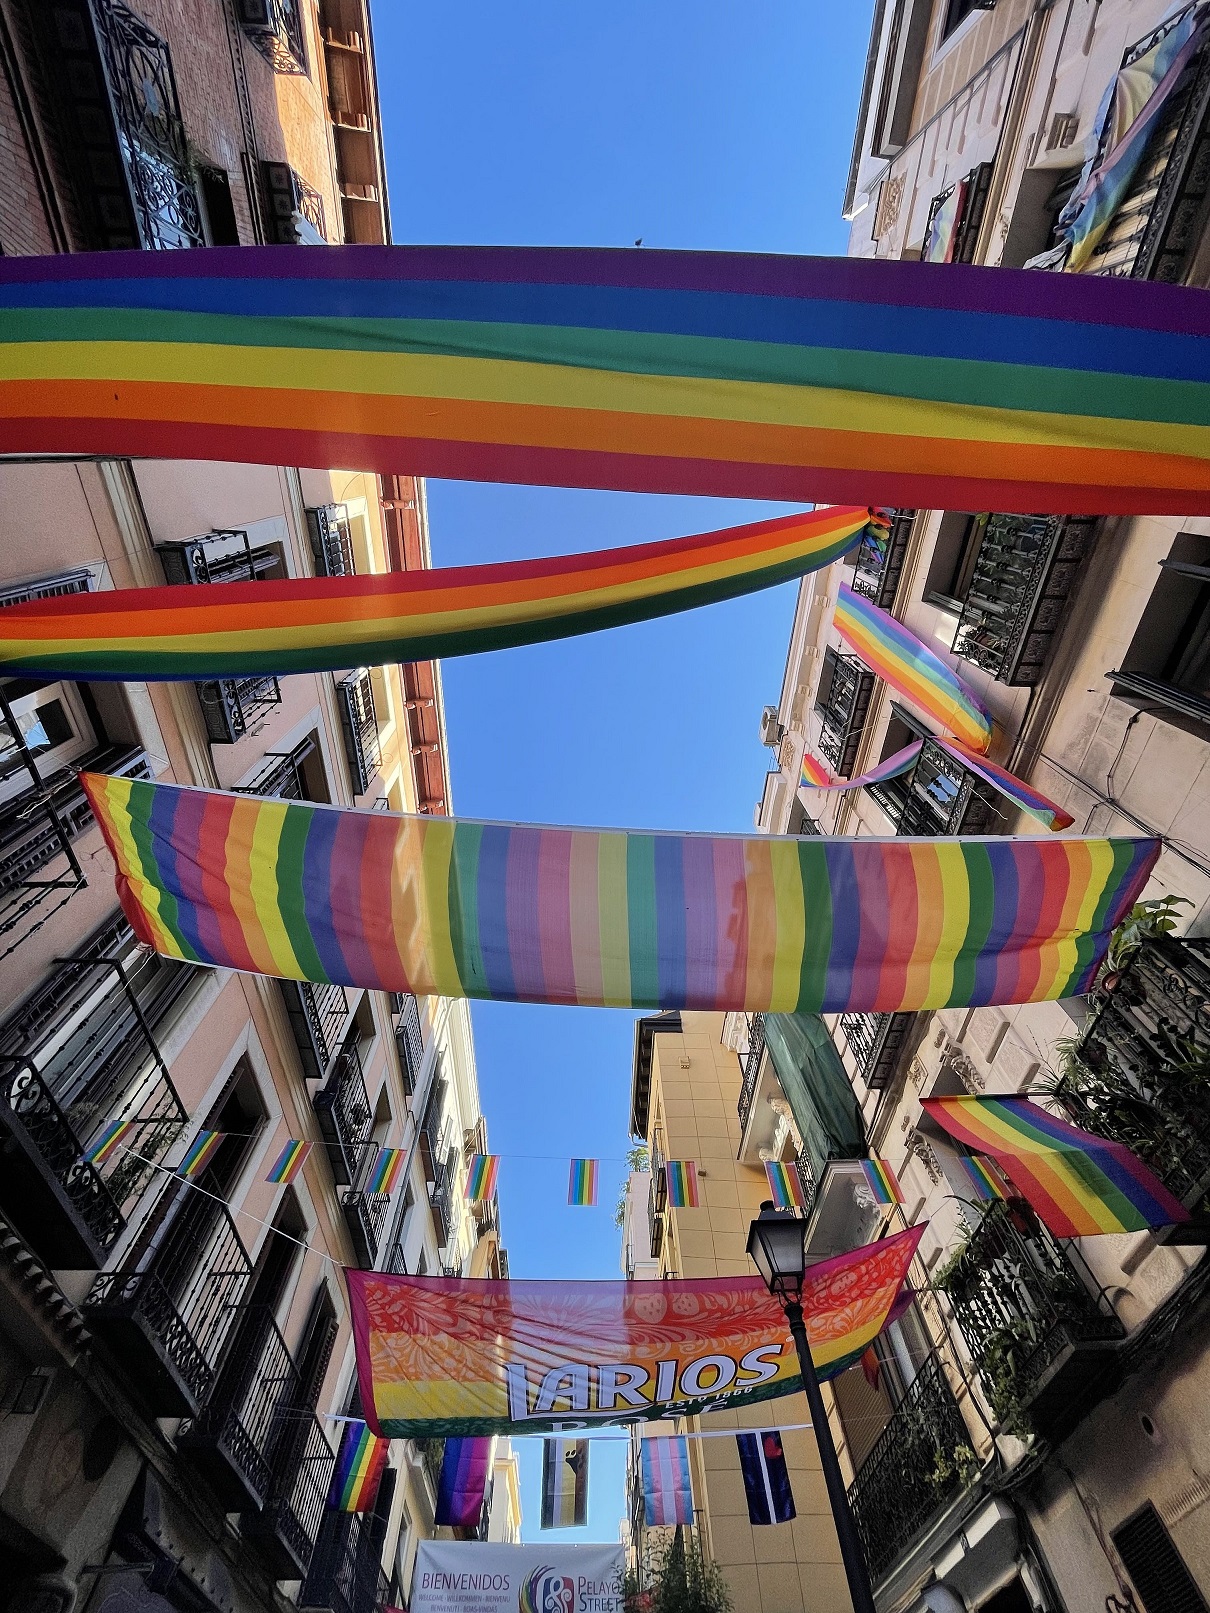 rainbow banners hanging between buildings